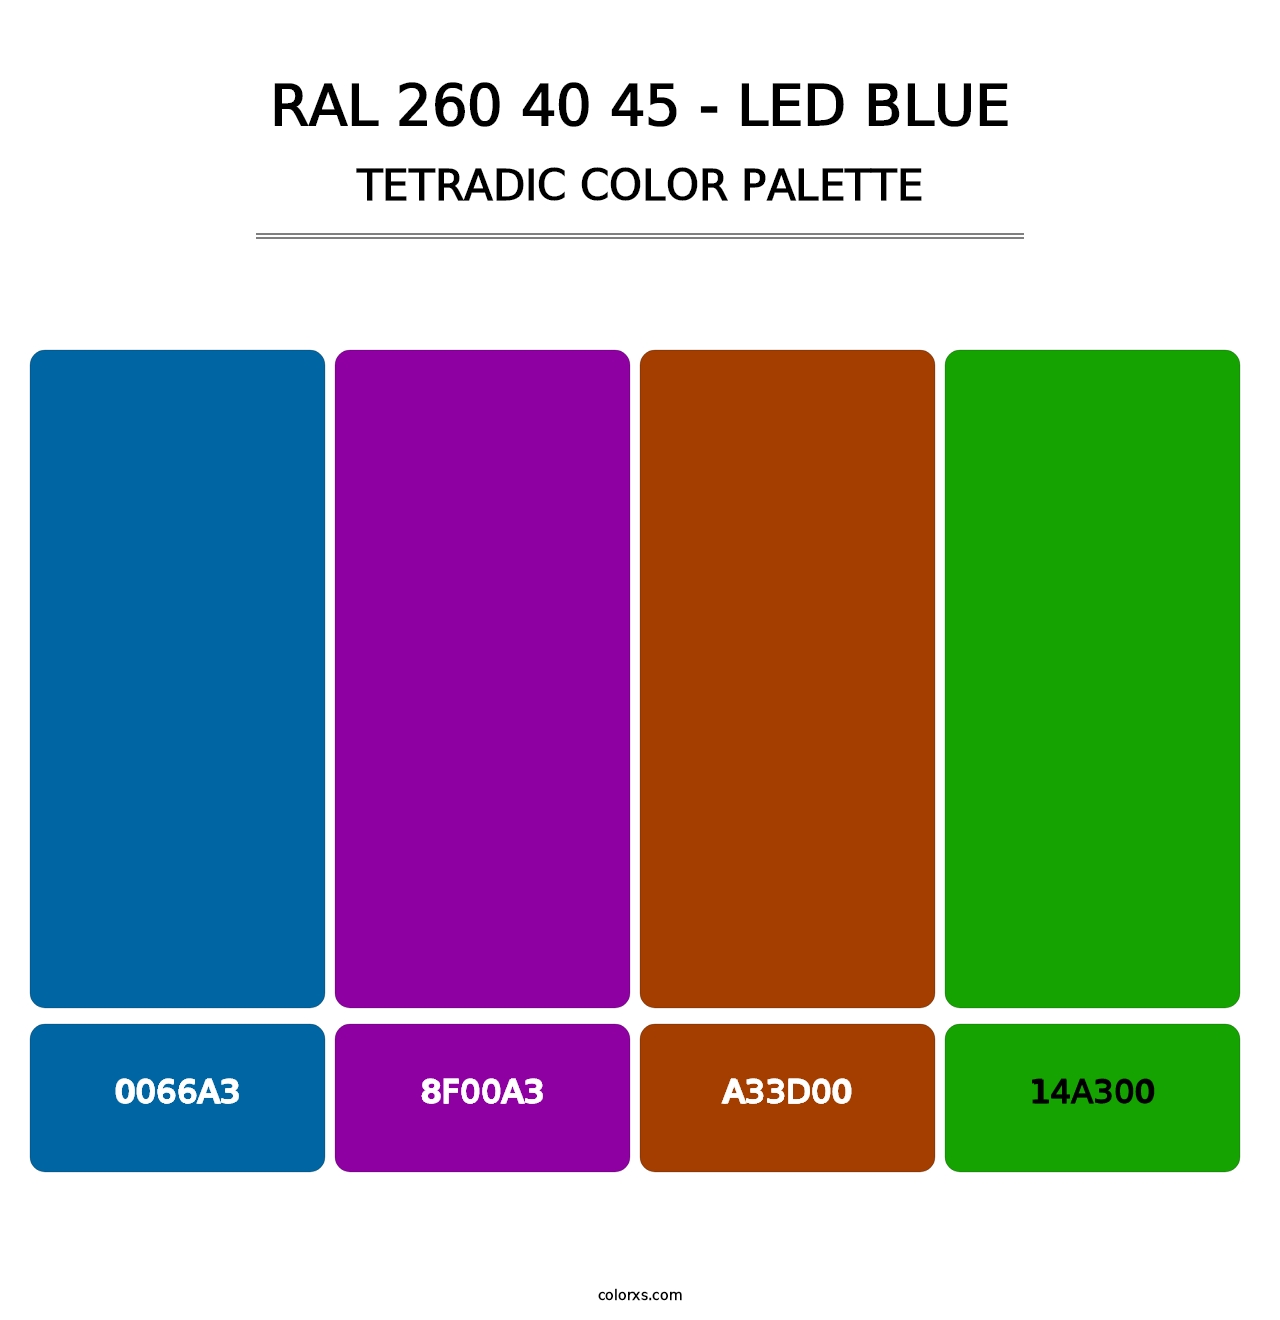 RAL 260 40 45 - LED Blue - Tetradic Color Palette